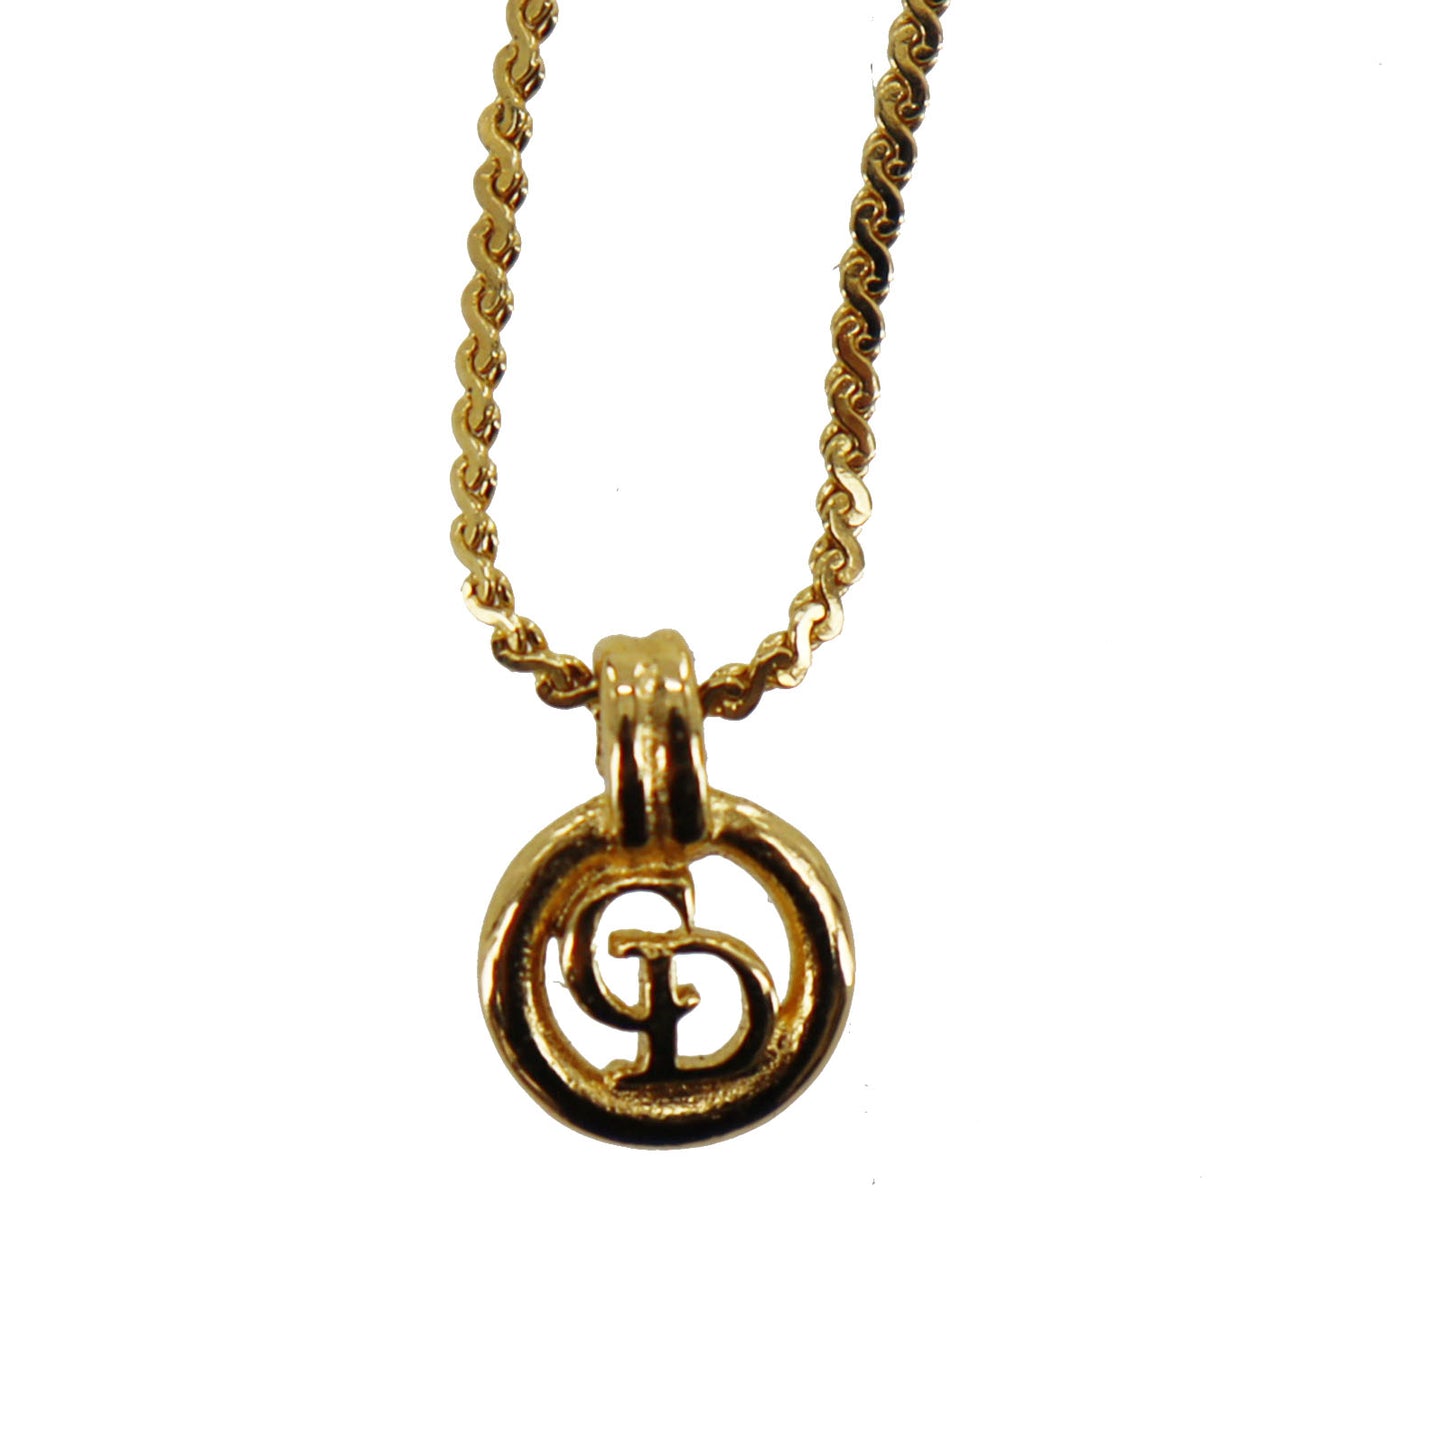 Christian Dior Logos Earrings & Necklace Gold Set Item #BO593 #BR49